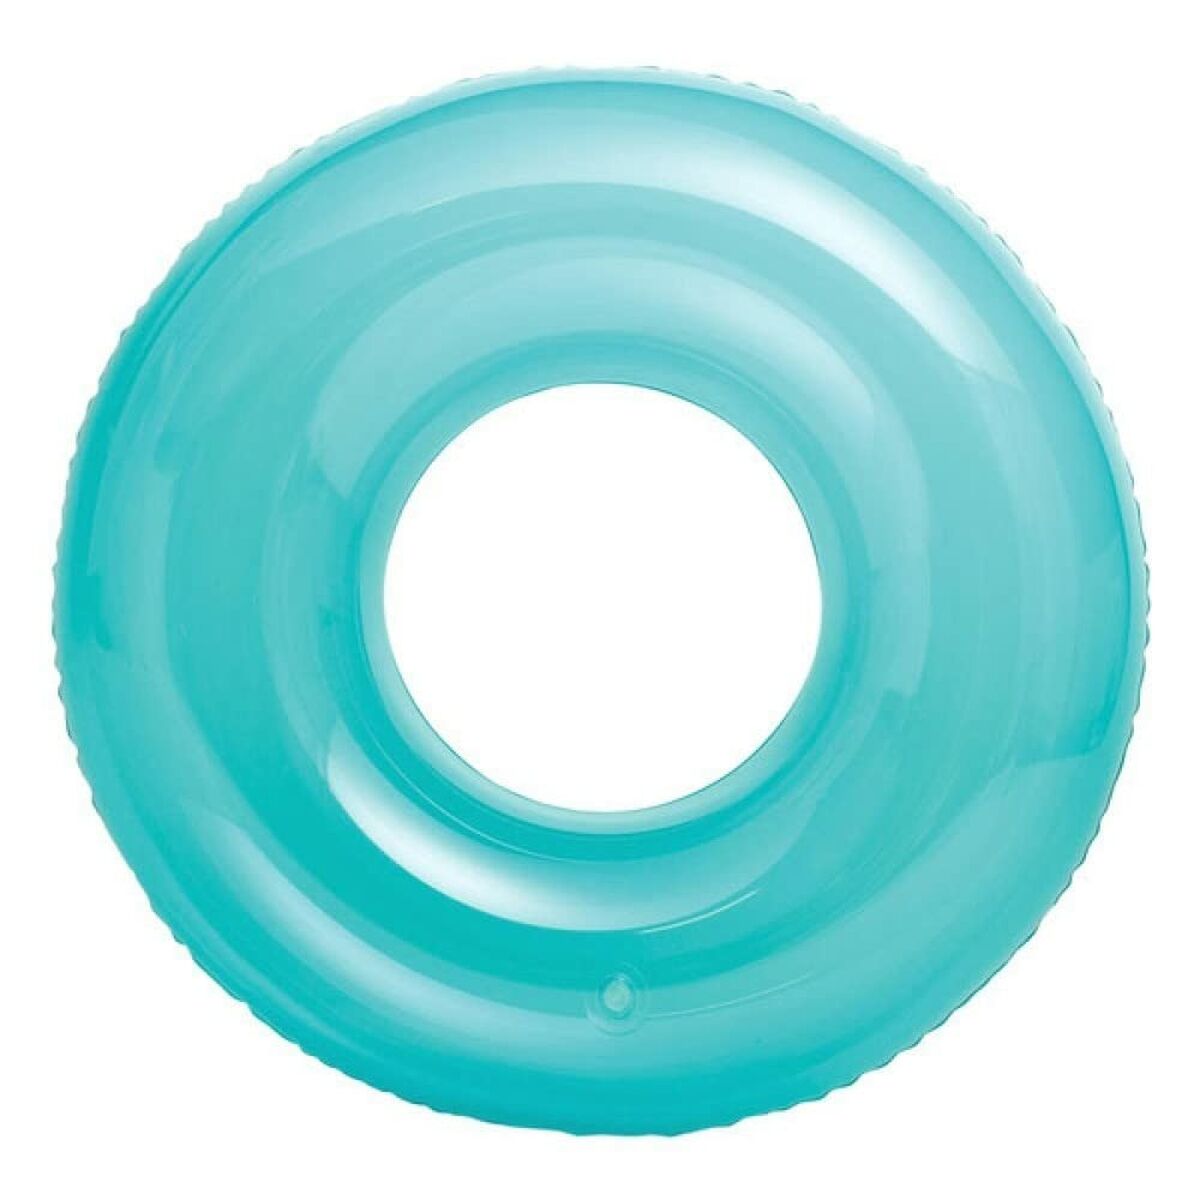 Inflatable Floating Doughnut Intex 76 cm